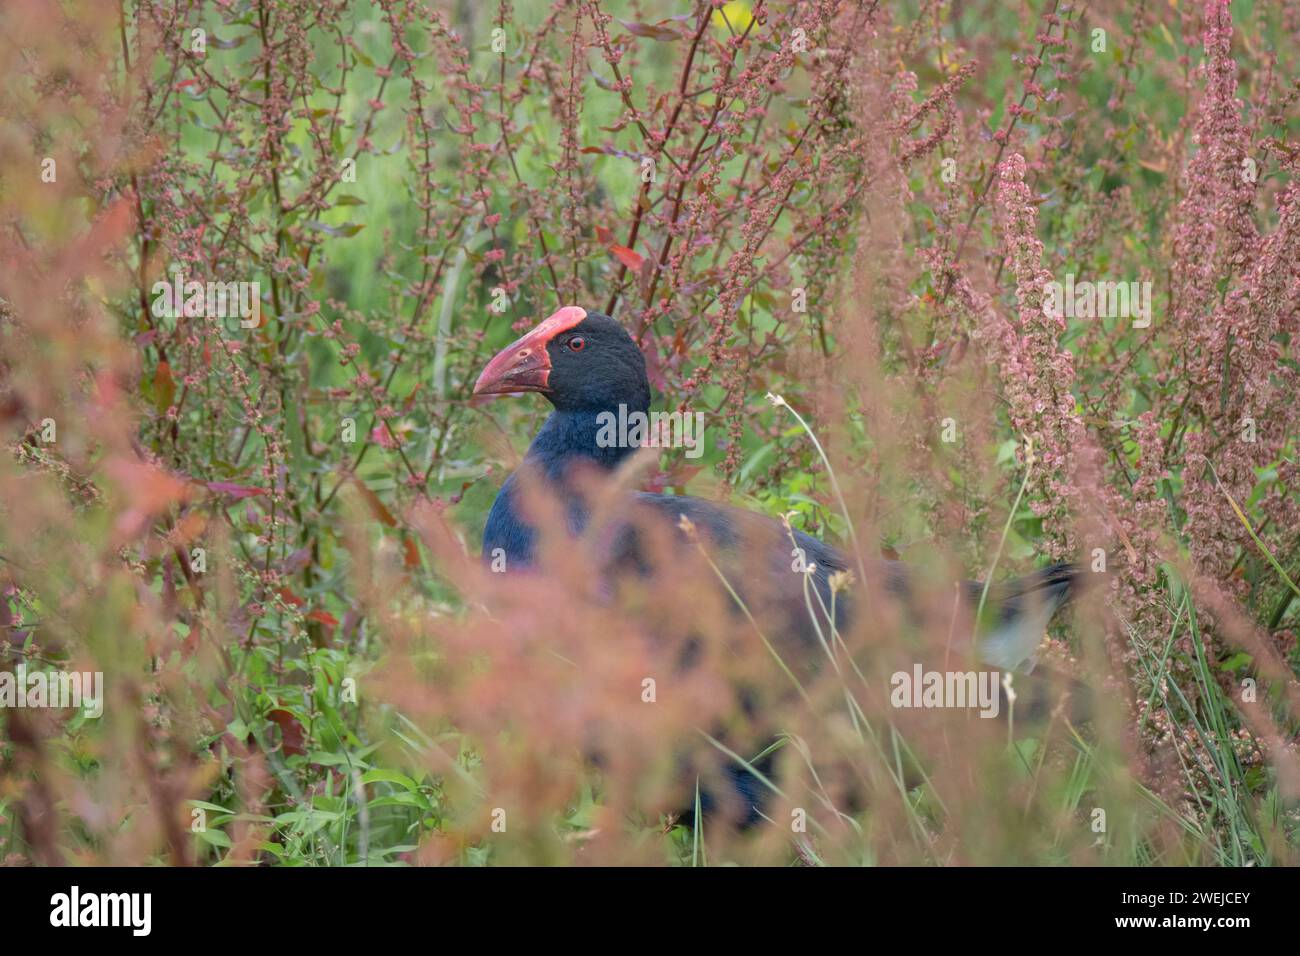 A pukeko wandering through the dense undergrowth of the wetland habitat. Stock Photo